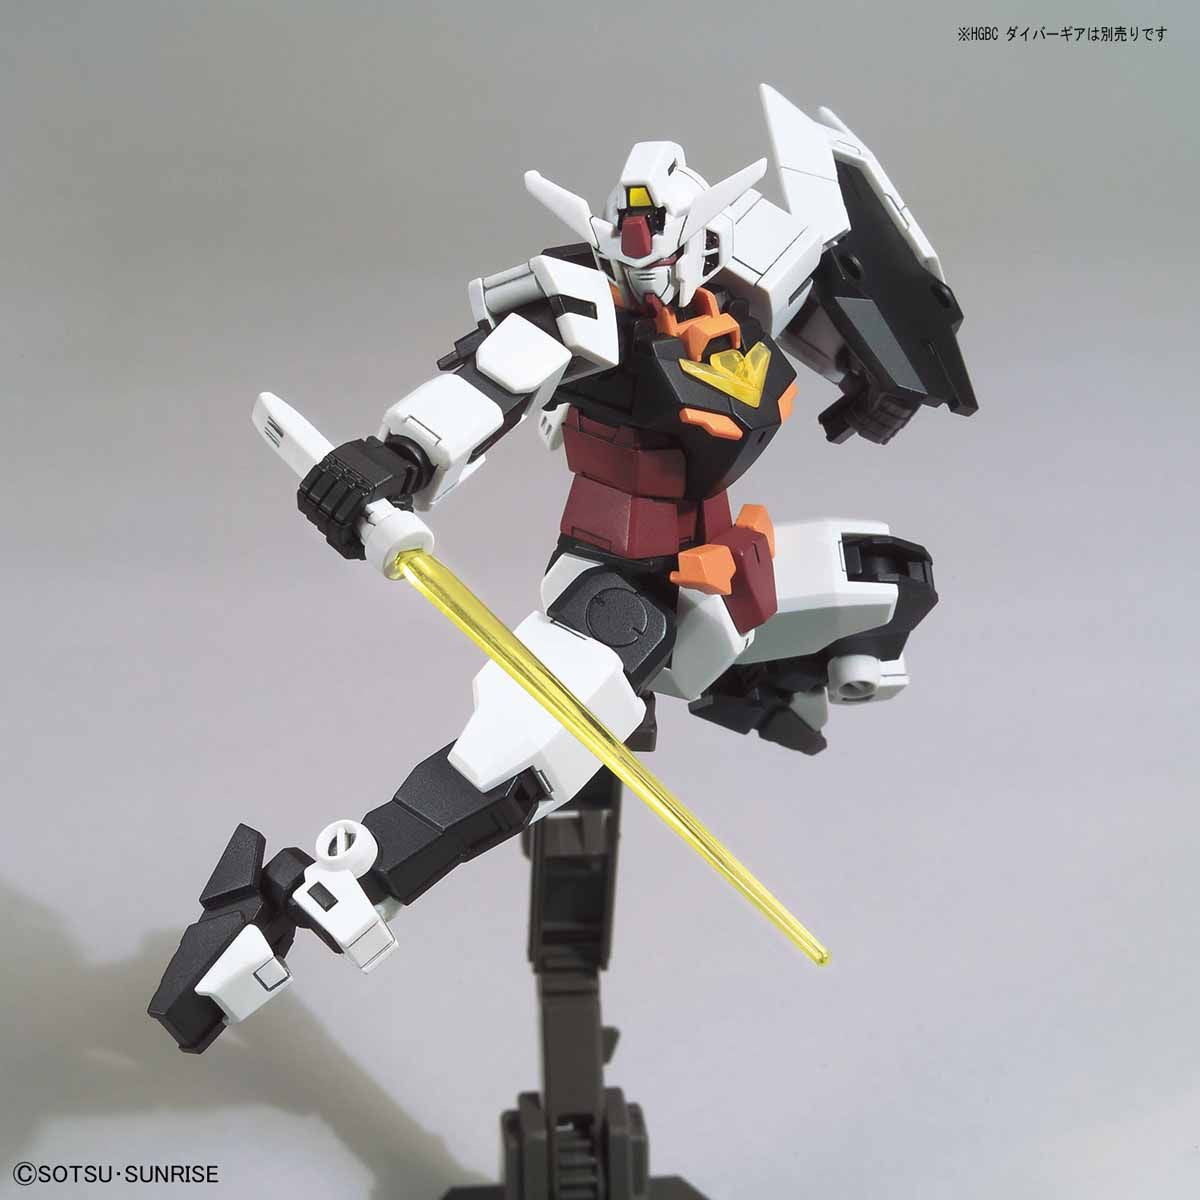 HGBD:R - PFF-X7/M4 Marsfour Gundam